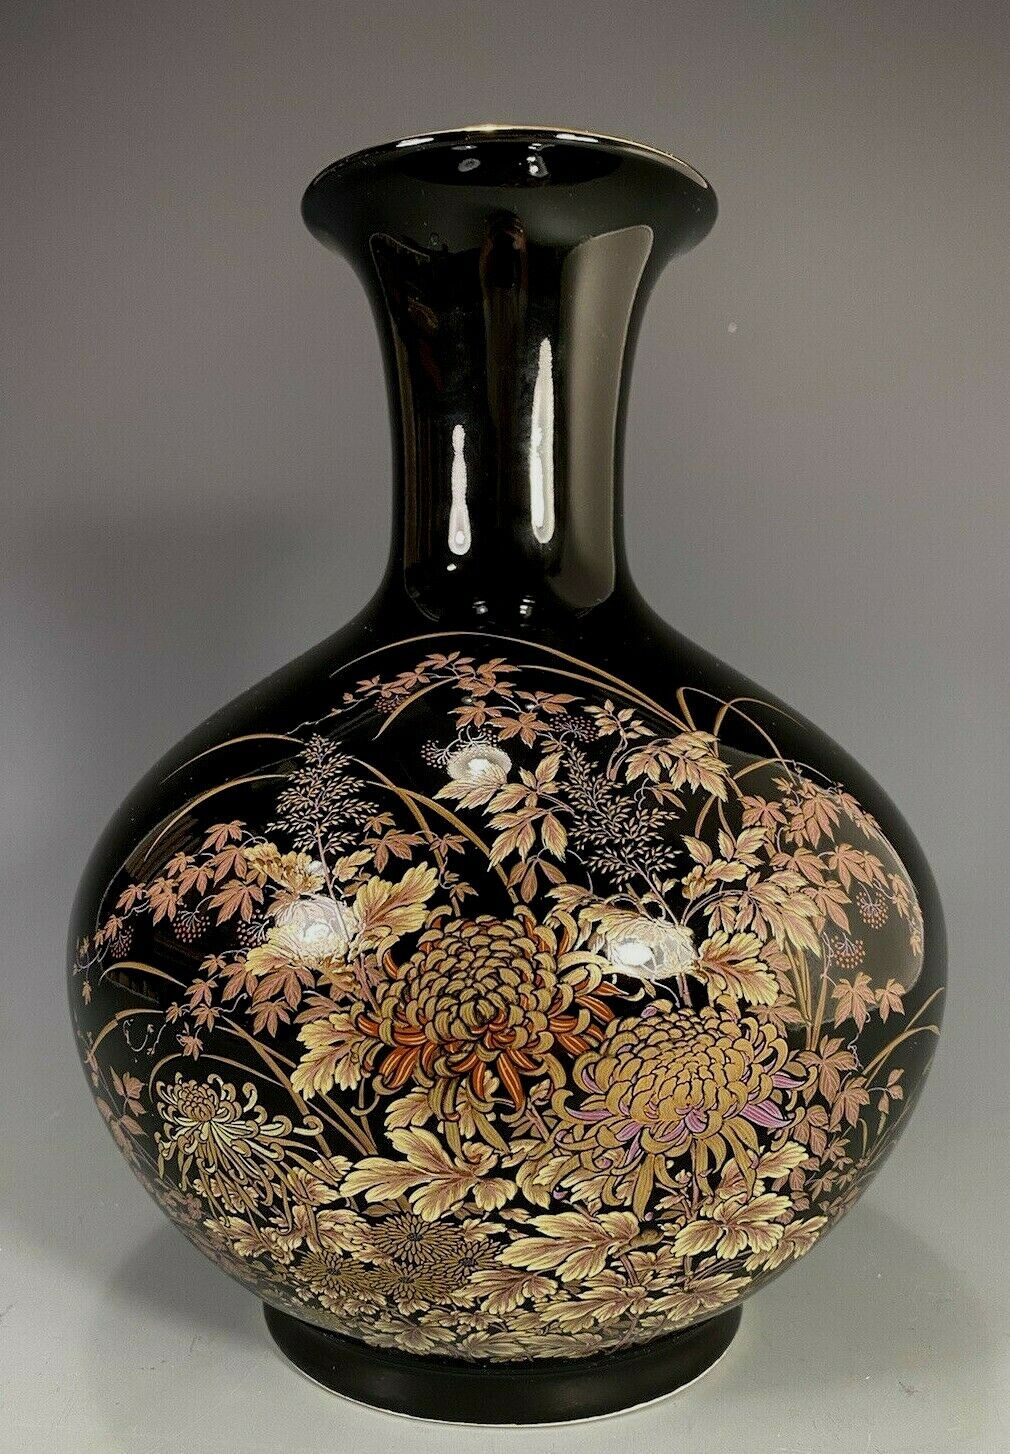 Shibata Japan Black Porcelain Black Vase w/ Polychrome Dragonflies Flower Design